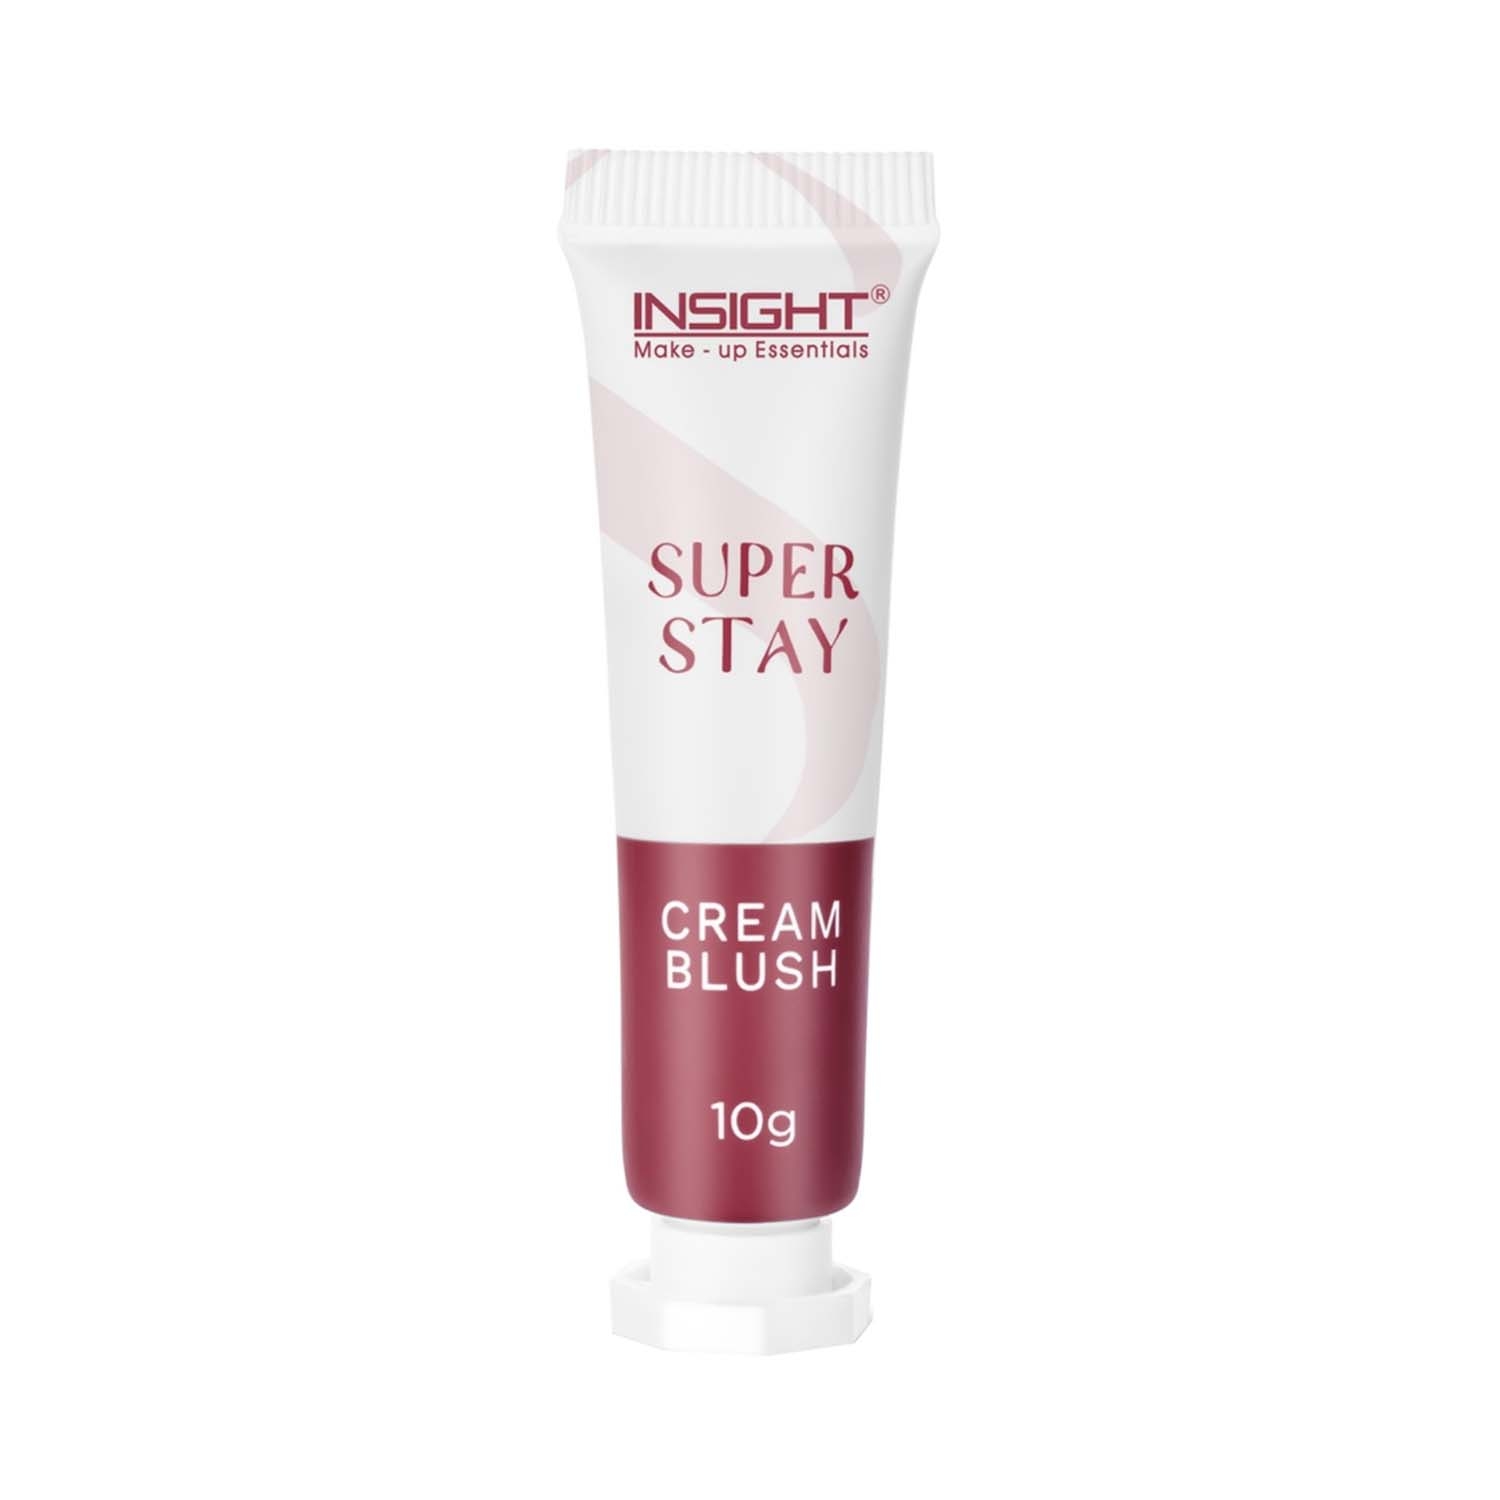 Insight Cosmetics | Insight Cosmetics Super Stay Cream Blush - Plum Jelly (10g)